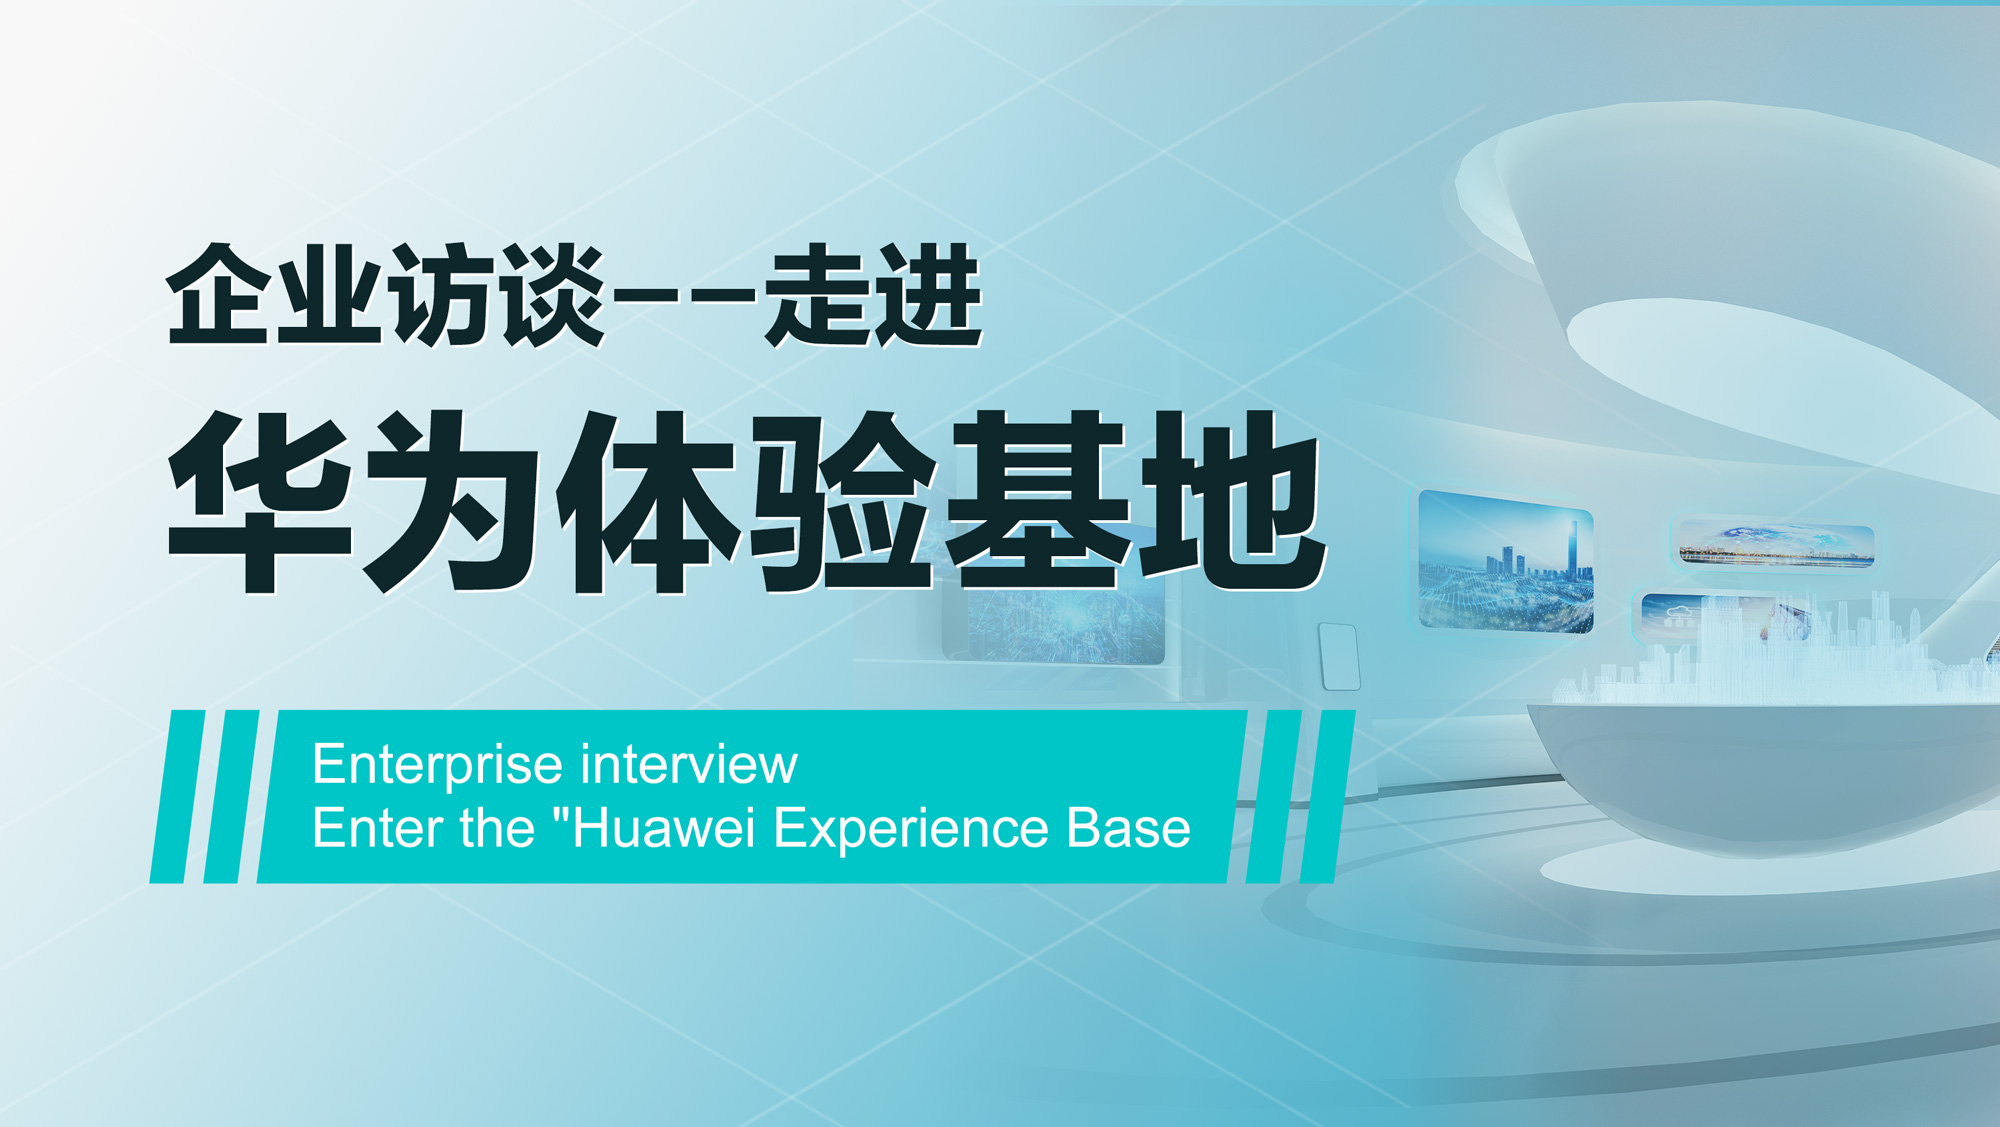 Enterprise interview -- Enter the “Huawei Experience Base”